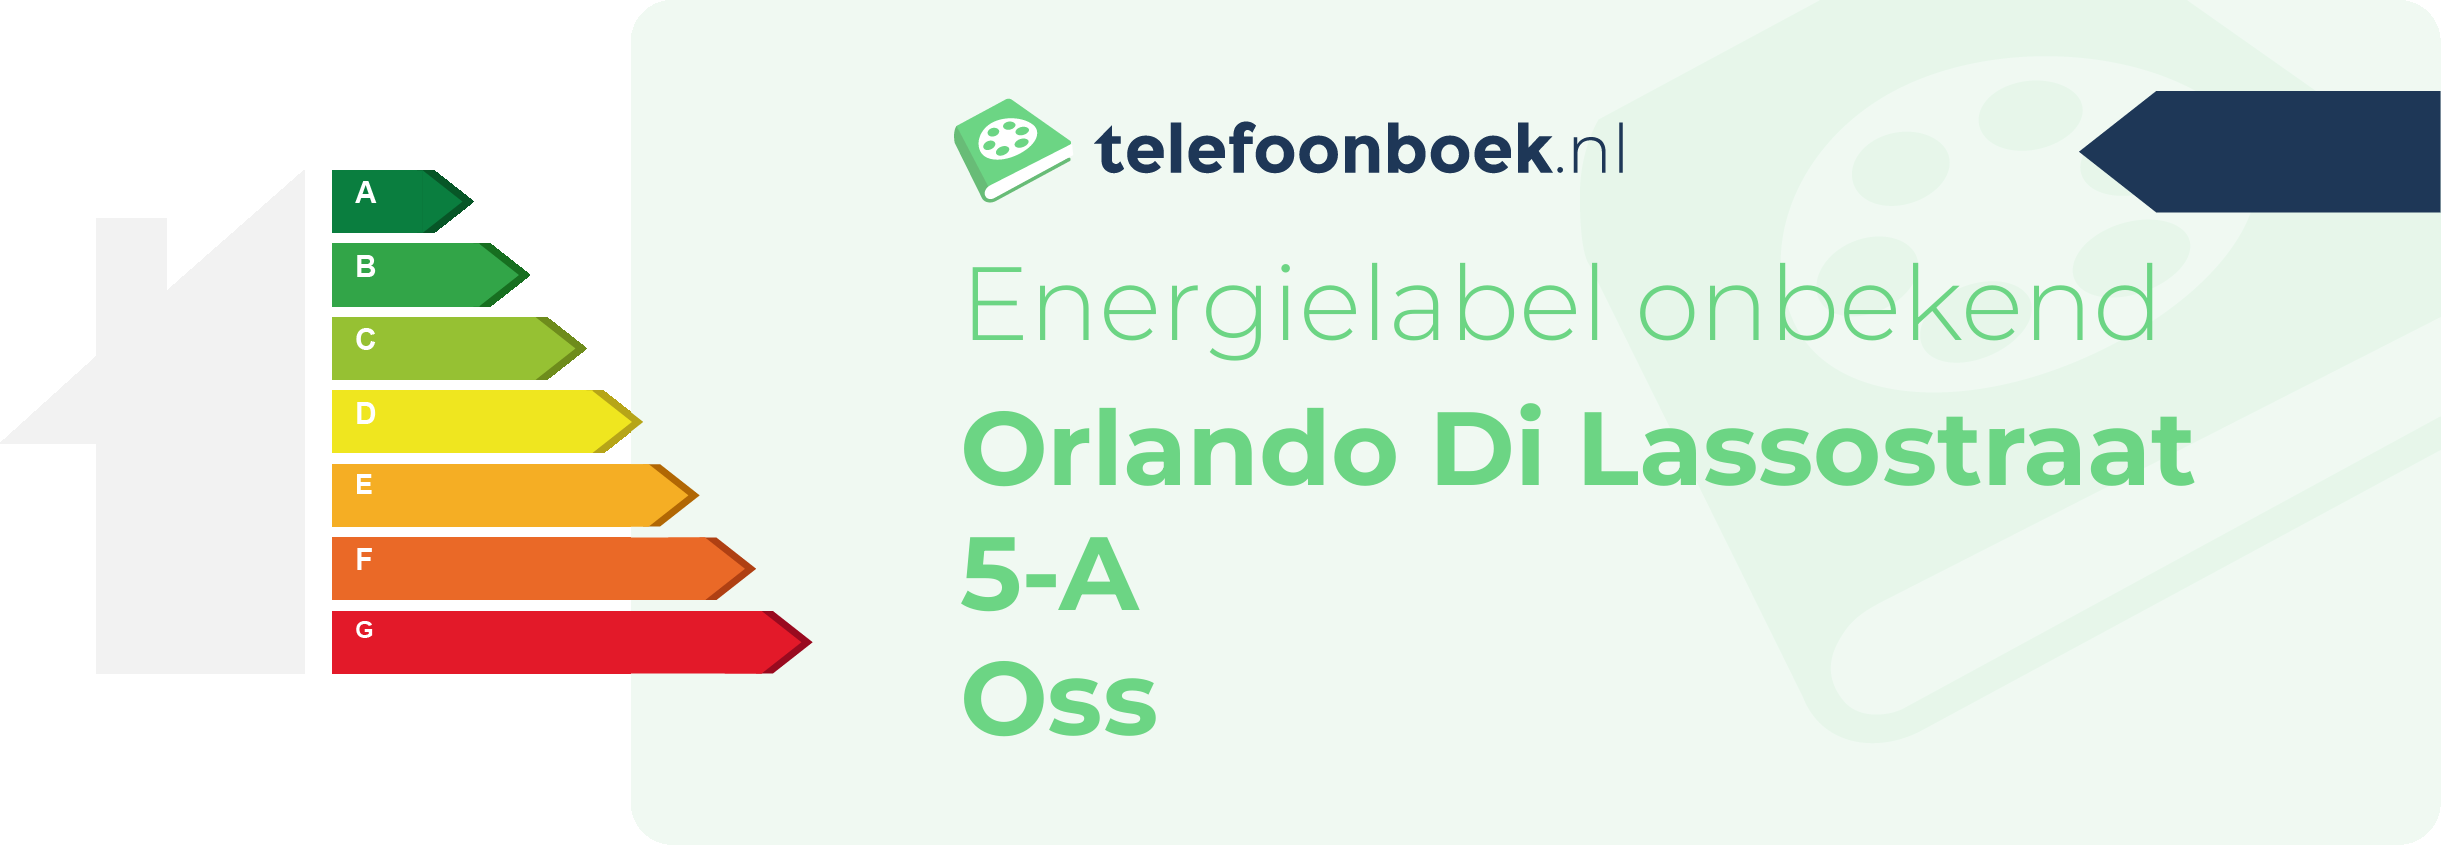 Energielabel Orlando Di Lassostraat 5-A Oss